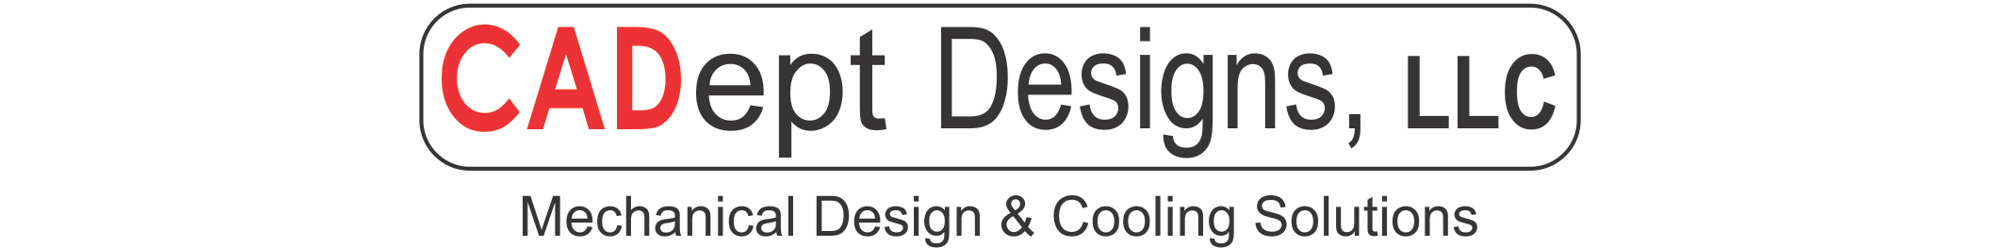 CADept Designs LLC